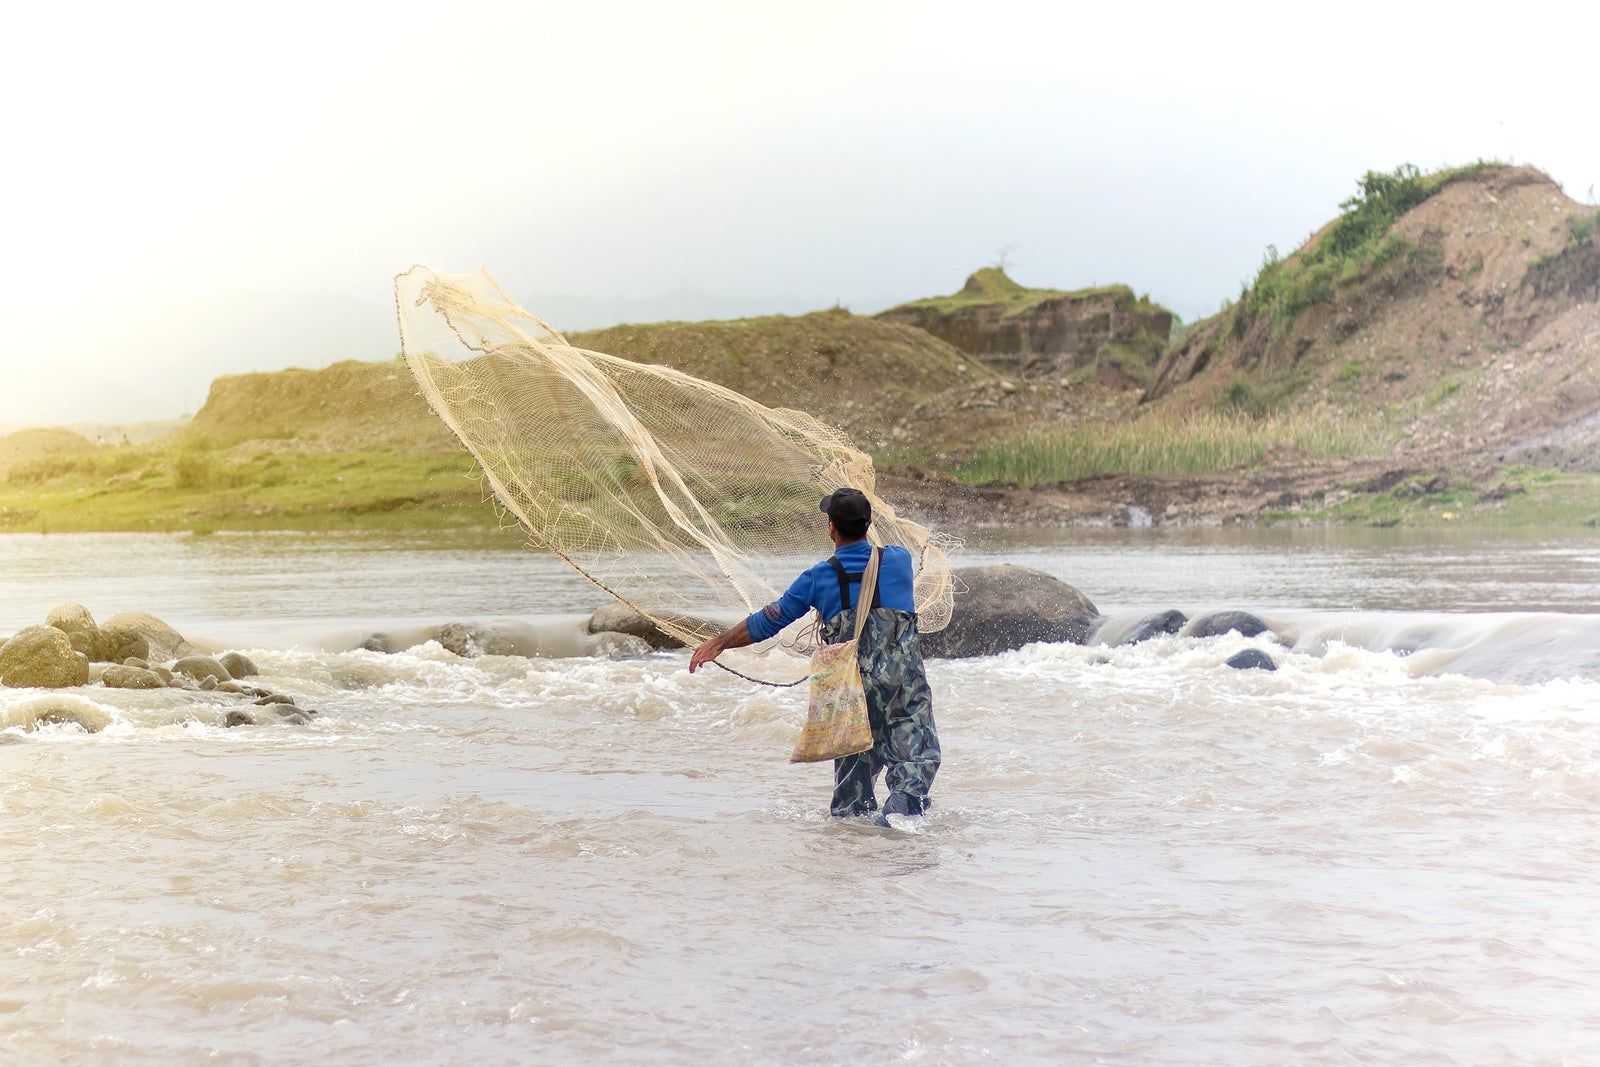 Throwing fishing net. Photo shot of water spatter from fisherman while throwing fishing net on the river.